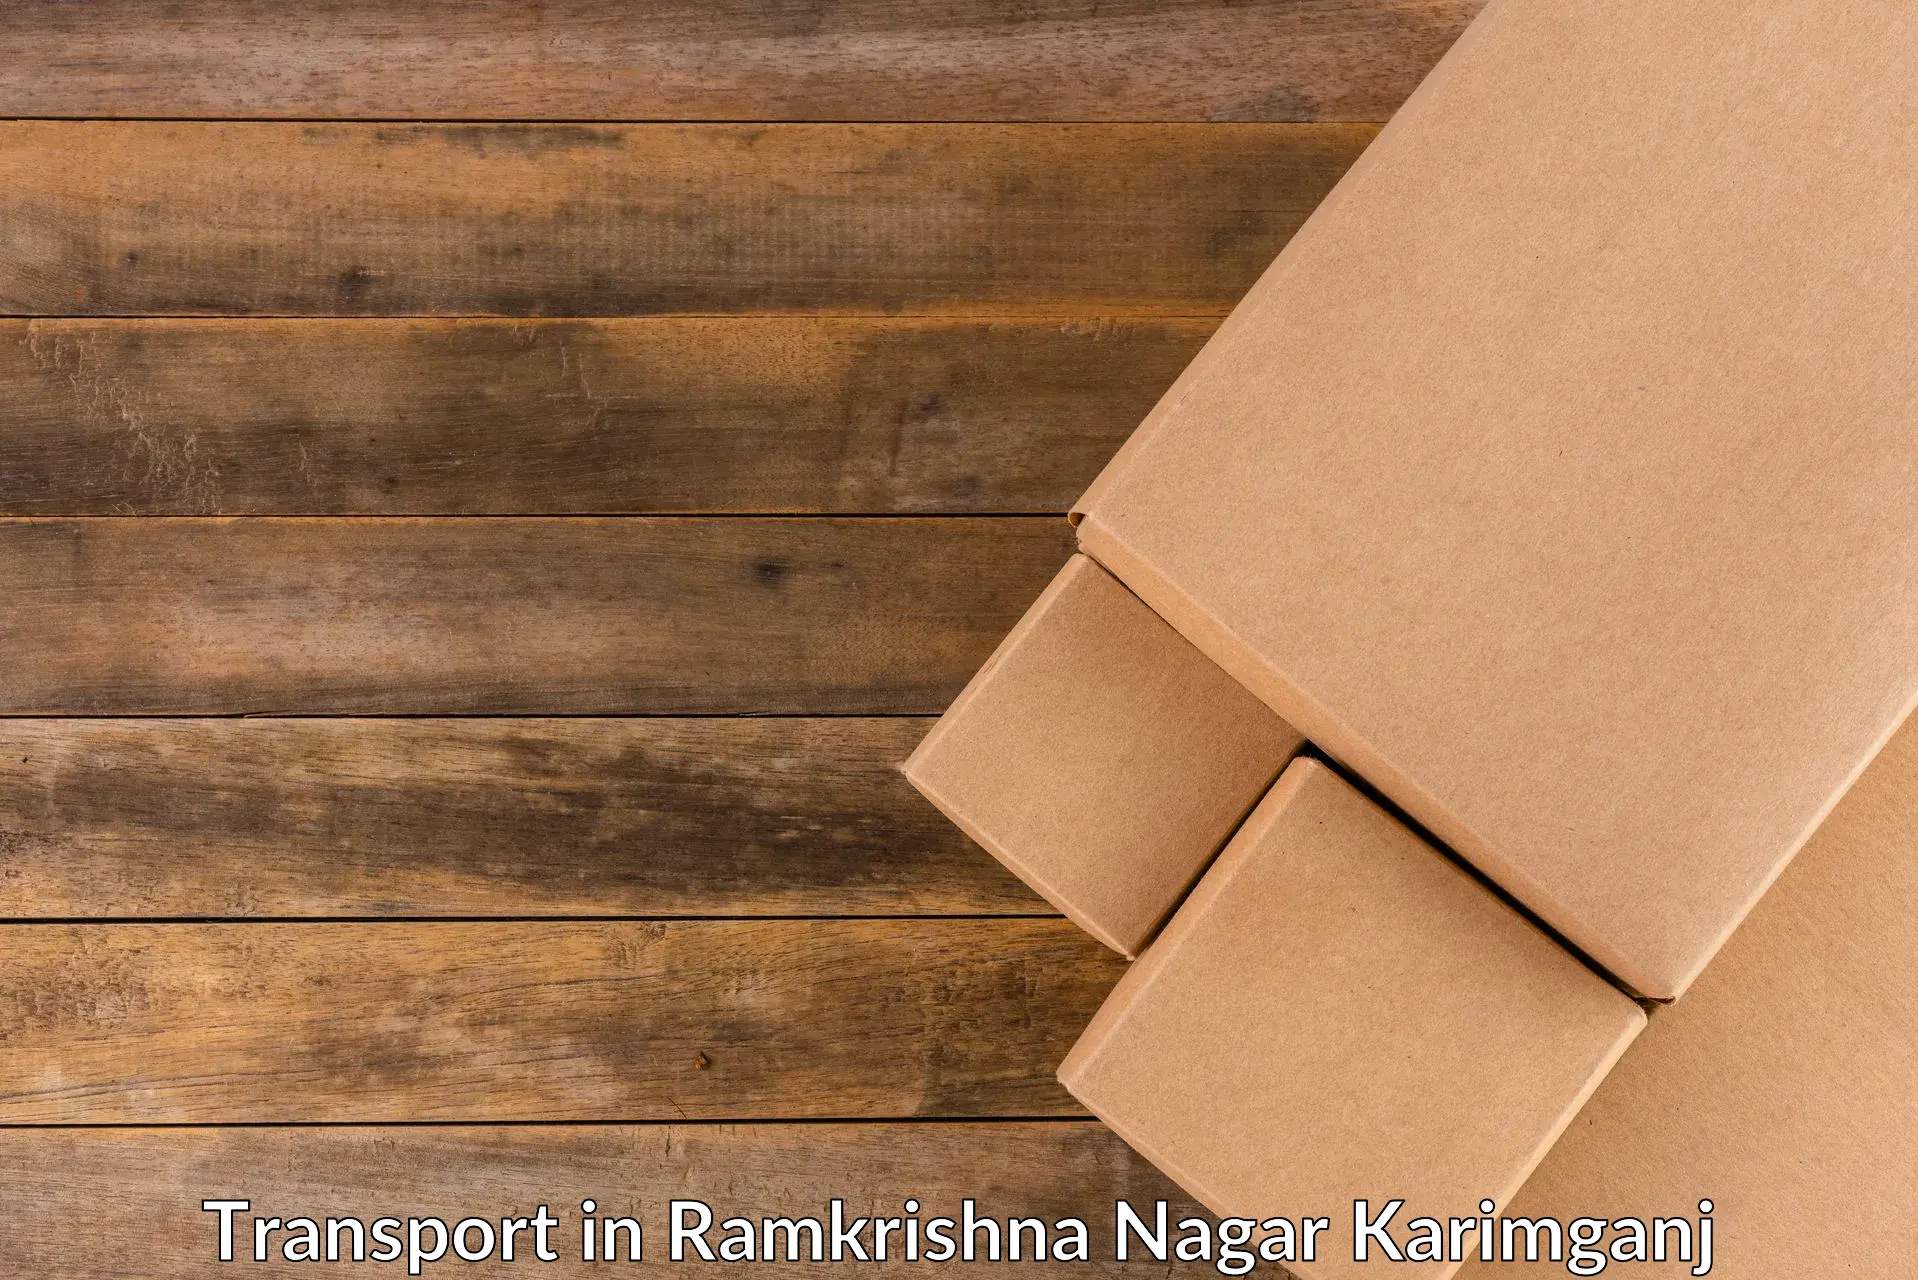 Transportation services in Ramkrishna Nagar Karimganj